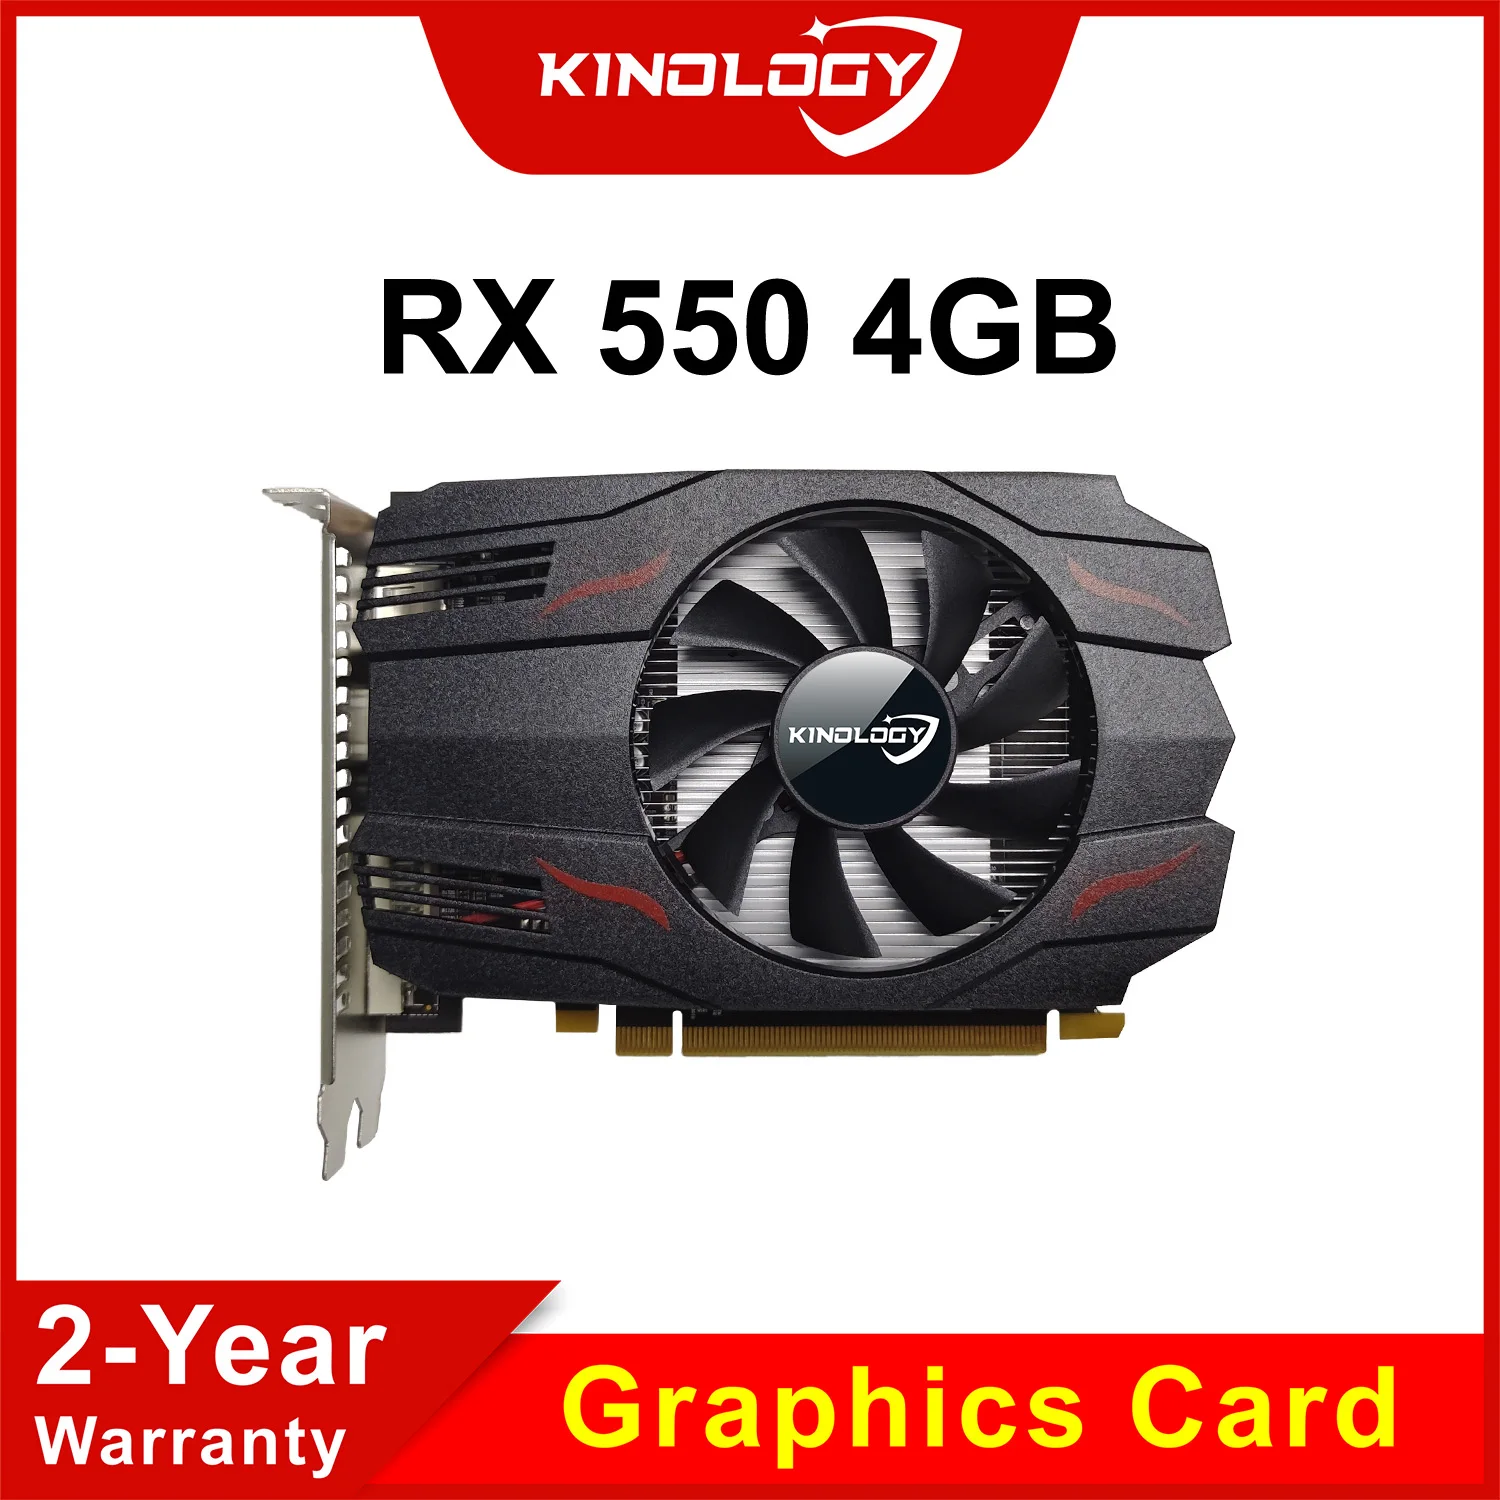 

Kinology AMD Radeon RX550 4GB GPU GDDR5 14nm For Desktop PC Games Video Office Graphics Card 128bit RX 550 Computer Components